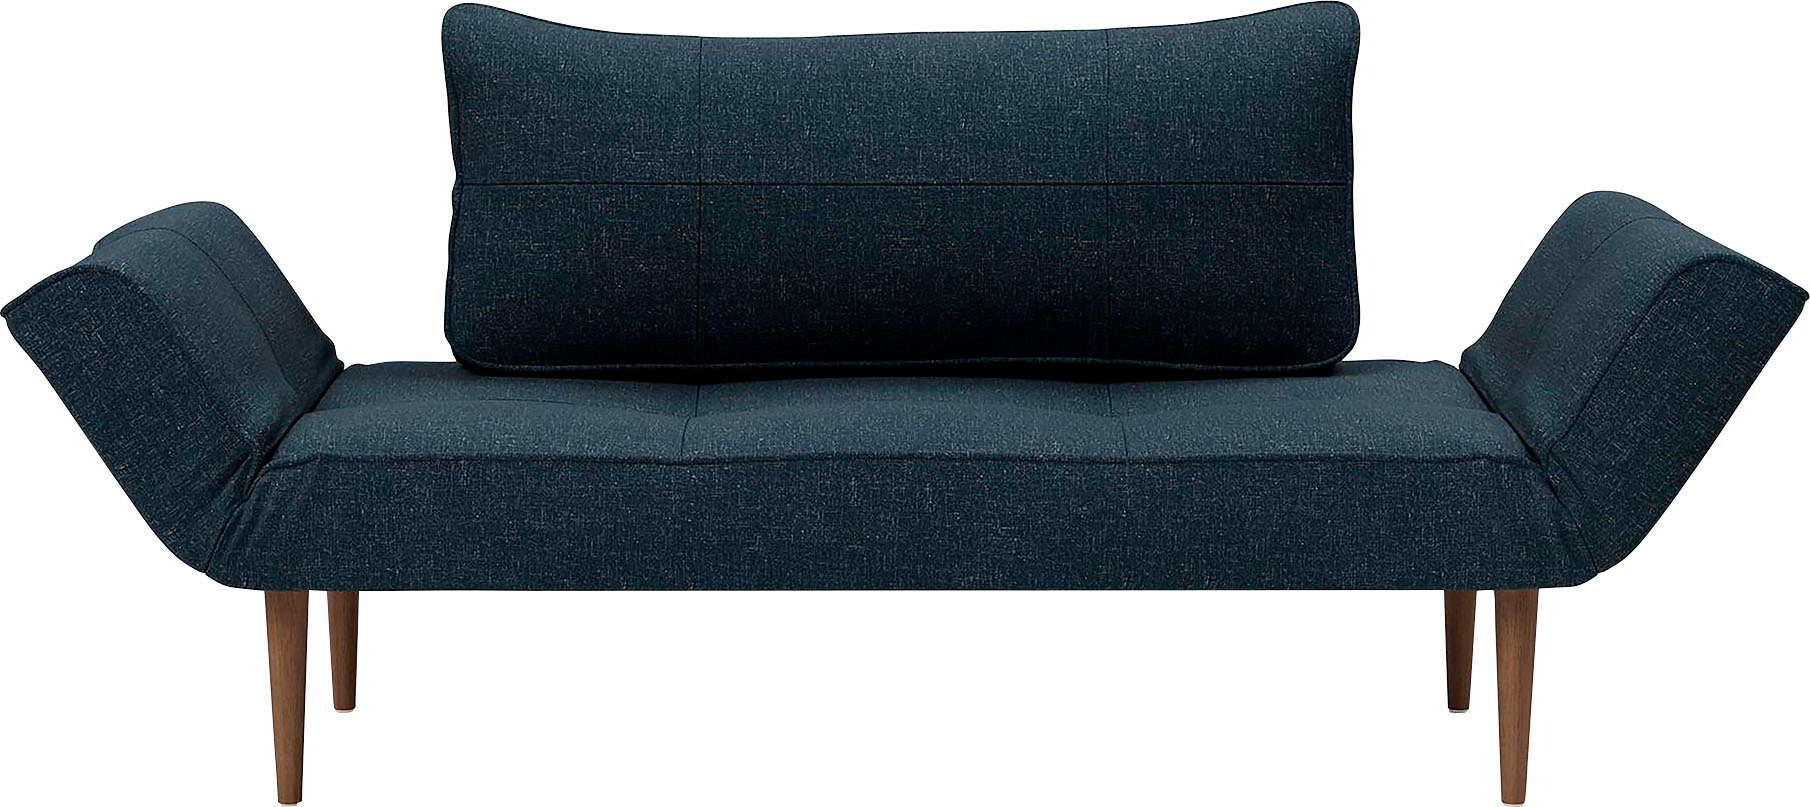 INNOVATION LIVING ™ Schlafsofa Zeal, im Scandinavian Design, Styletto Beine, inklusive Rückenkissen deep blue | deep blue | Alle Sofas